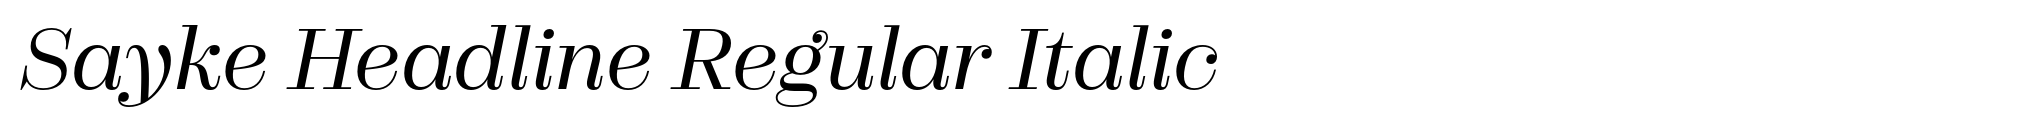 Sayke Headline Regular Italic image